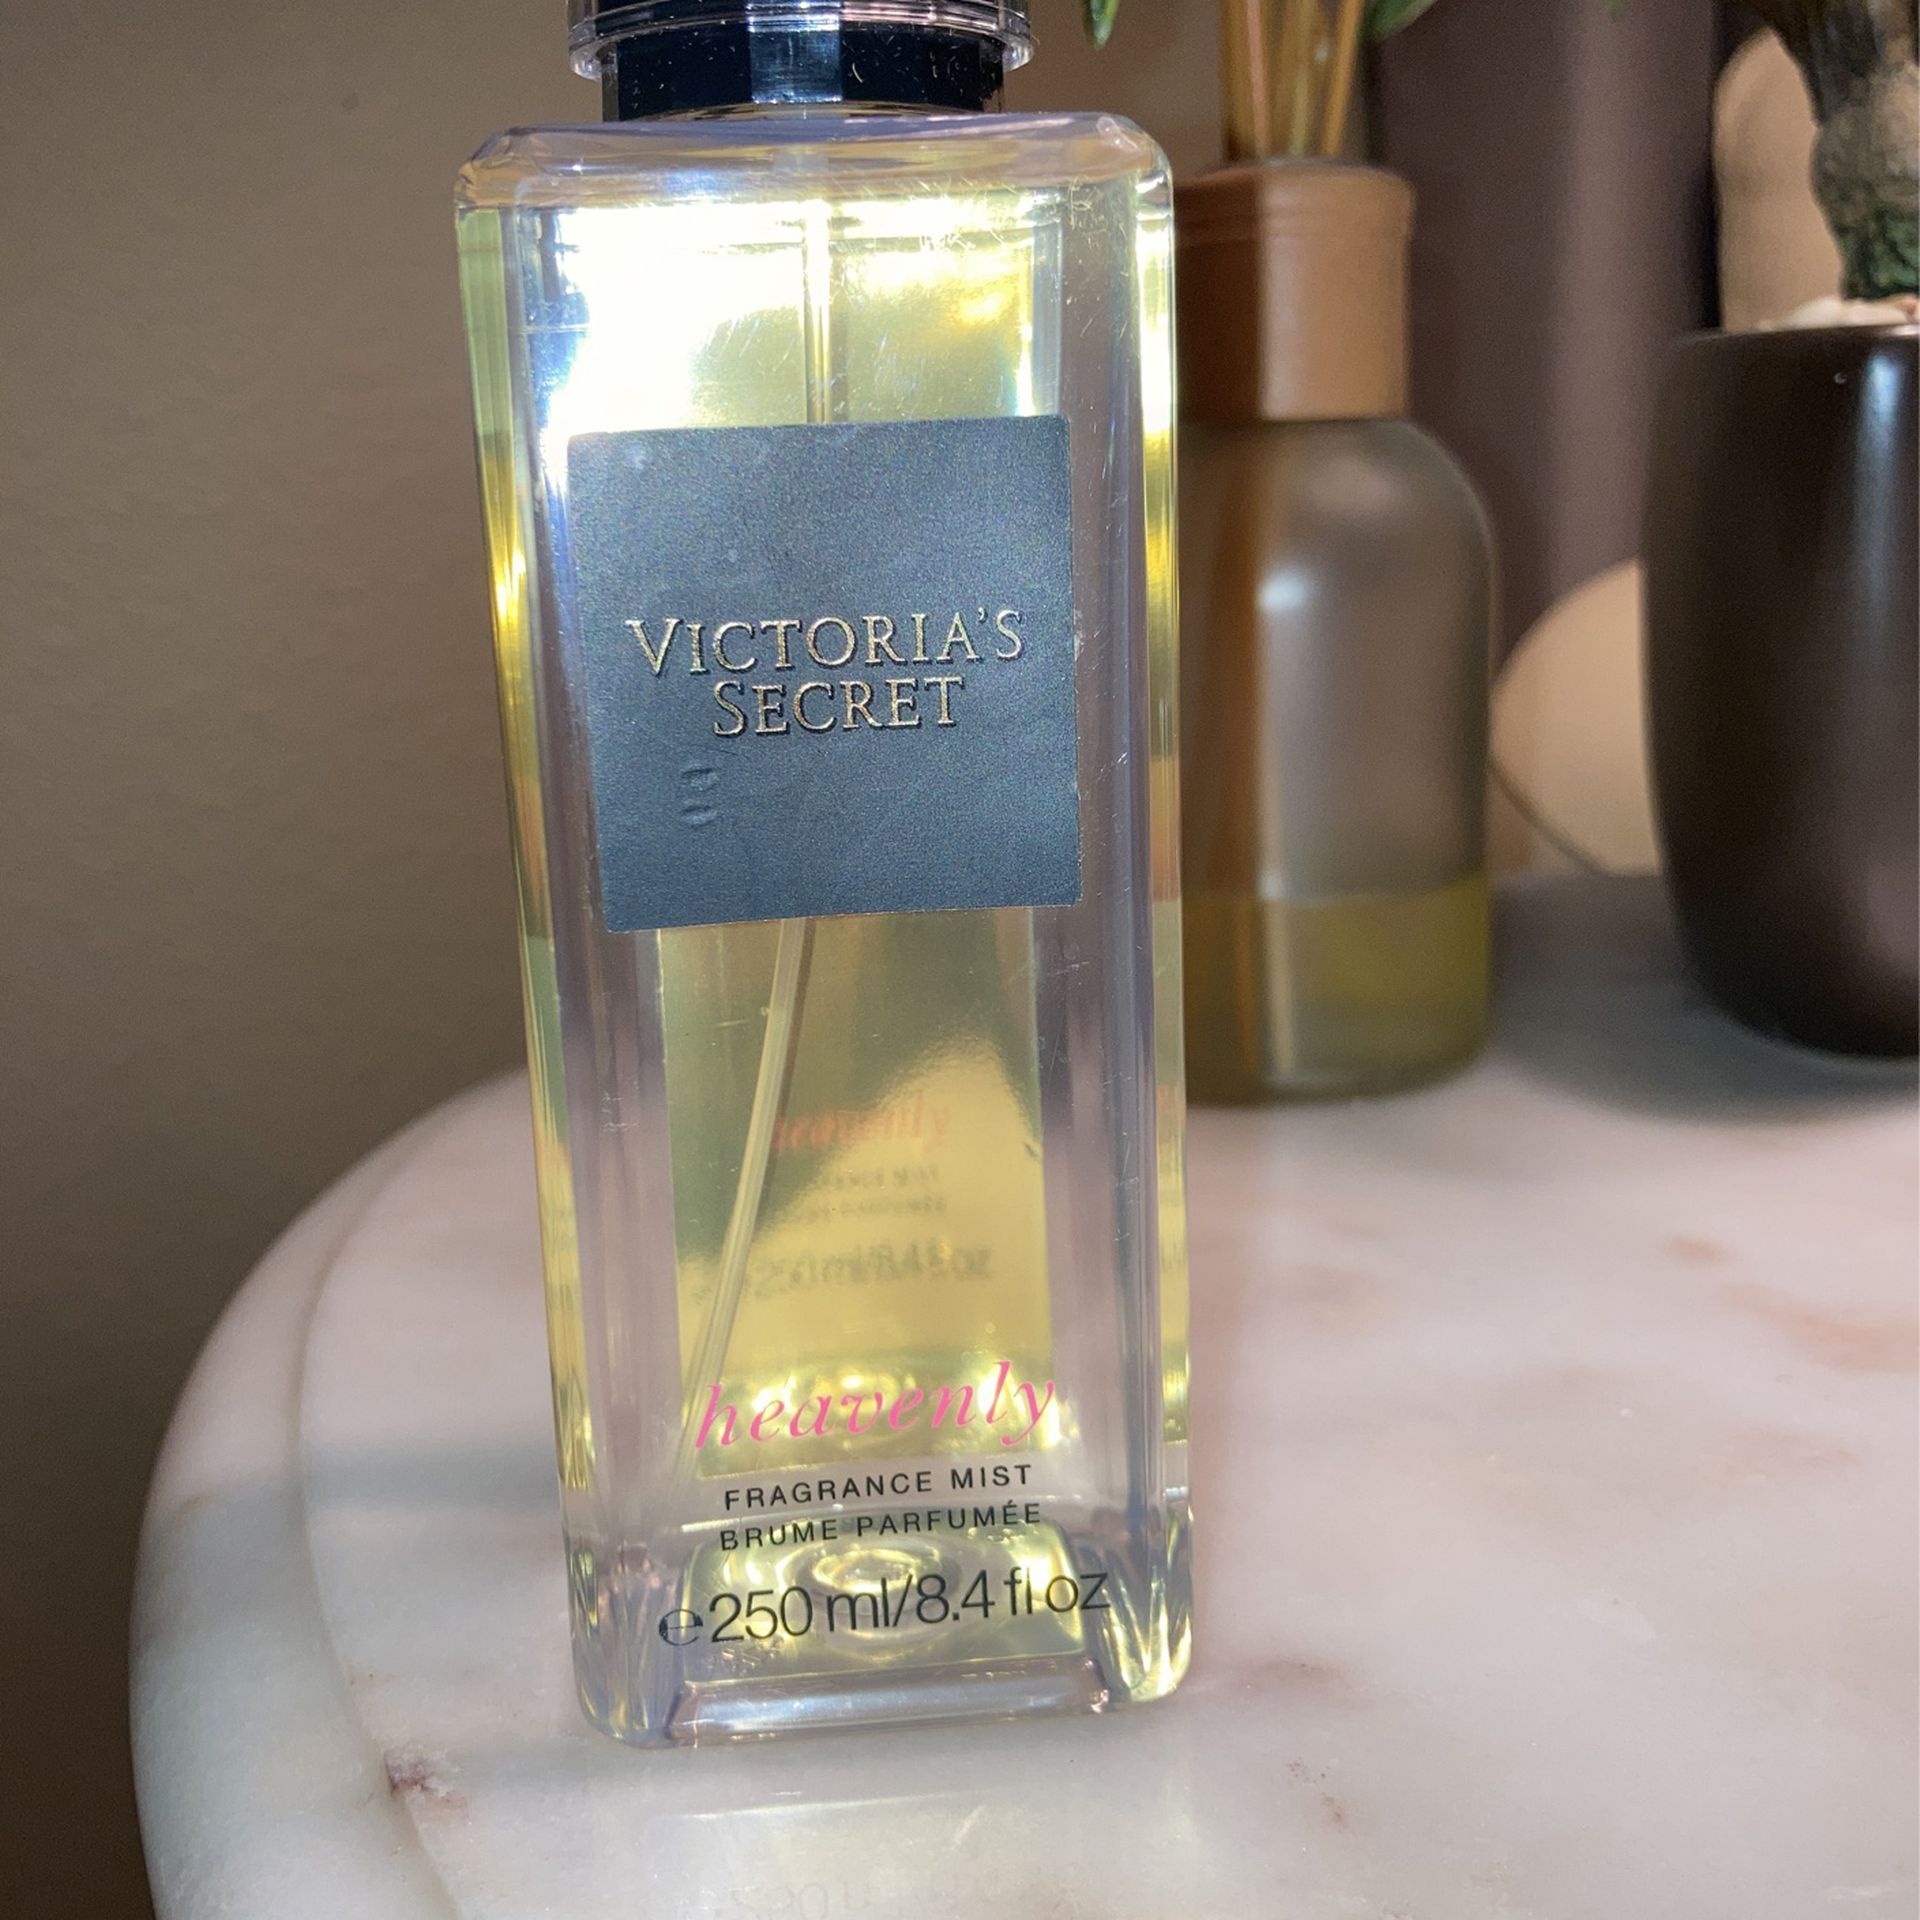 Heavenly perfume by Victoria‘s Secret